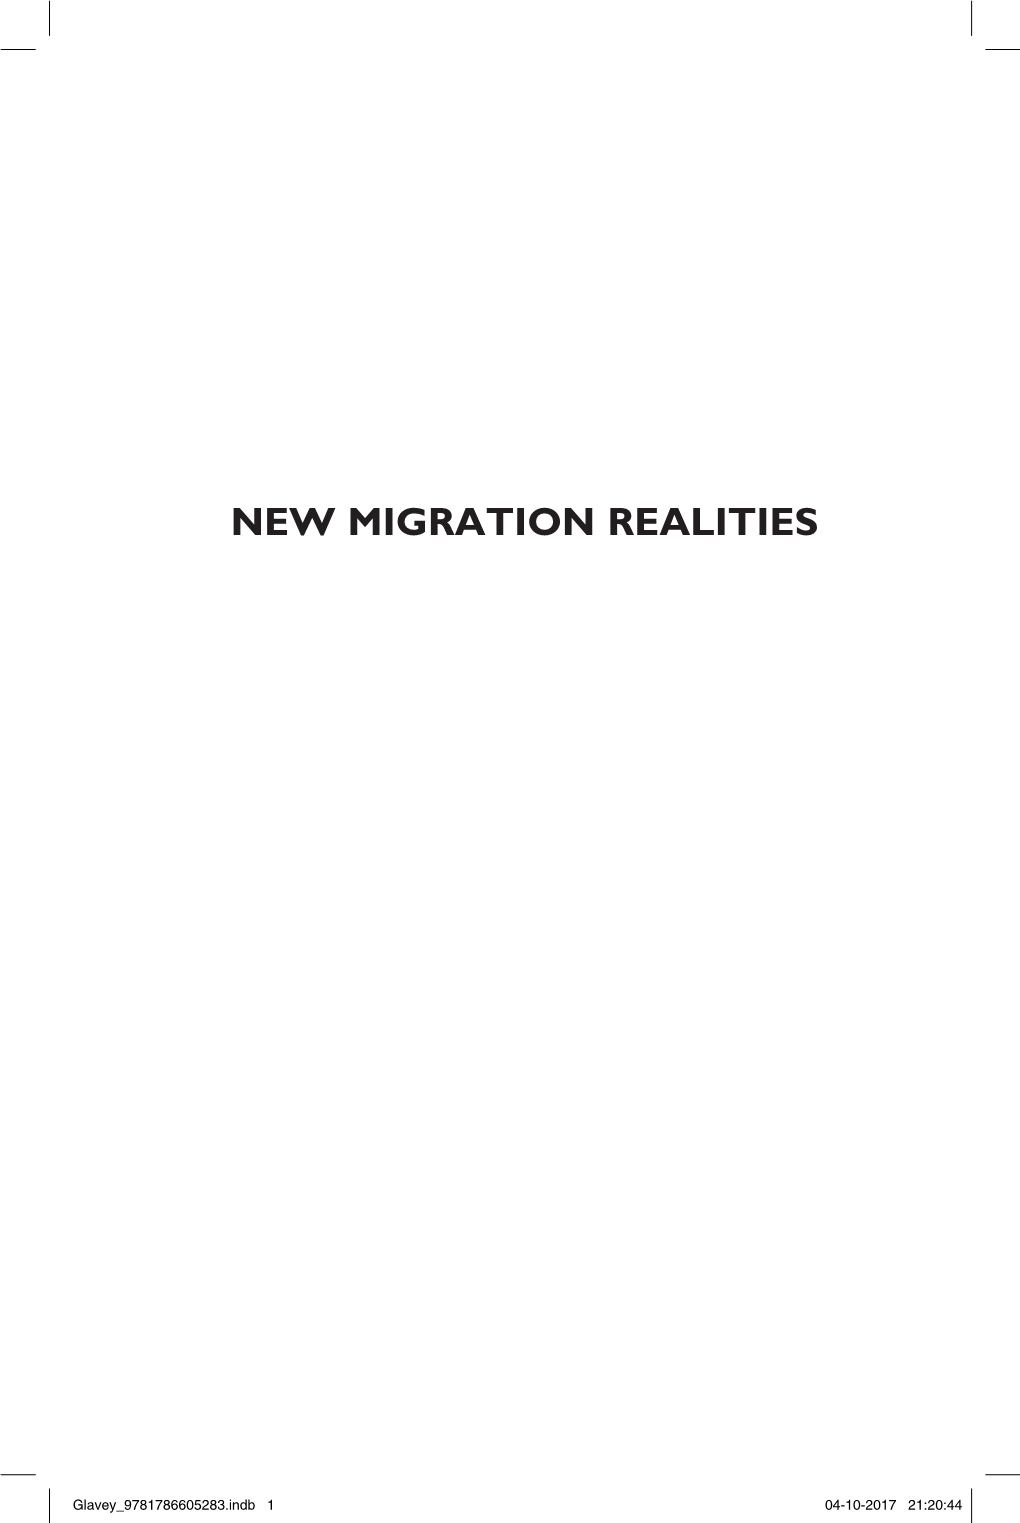 New Migration Realities